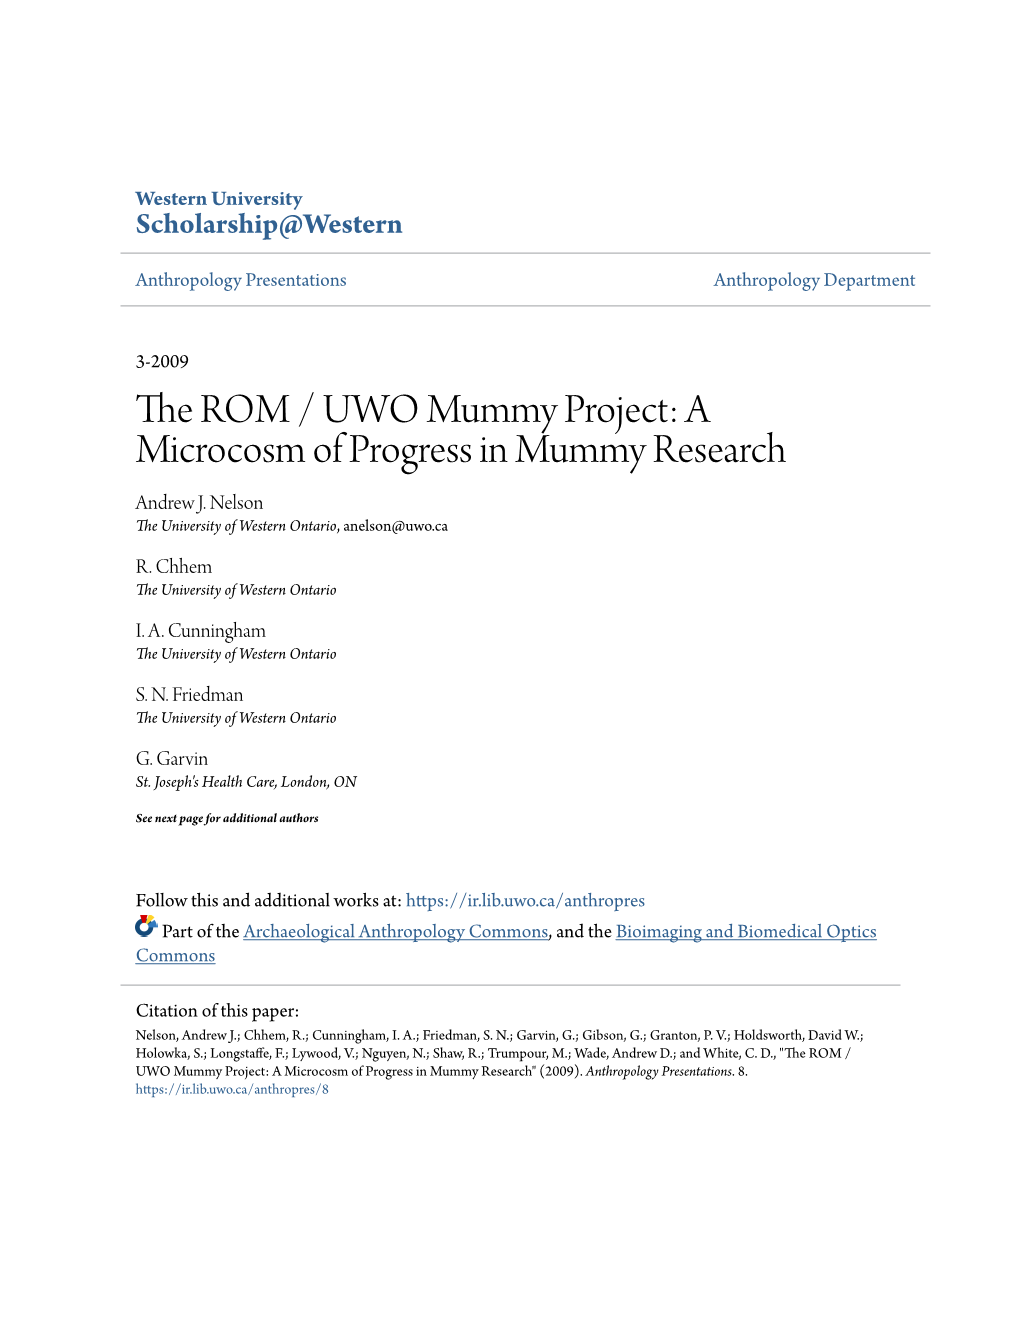 The ROM / UWO Mummy Project a Microcosm of Progress in Mummy Research